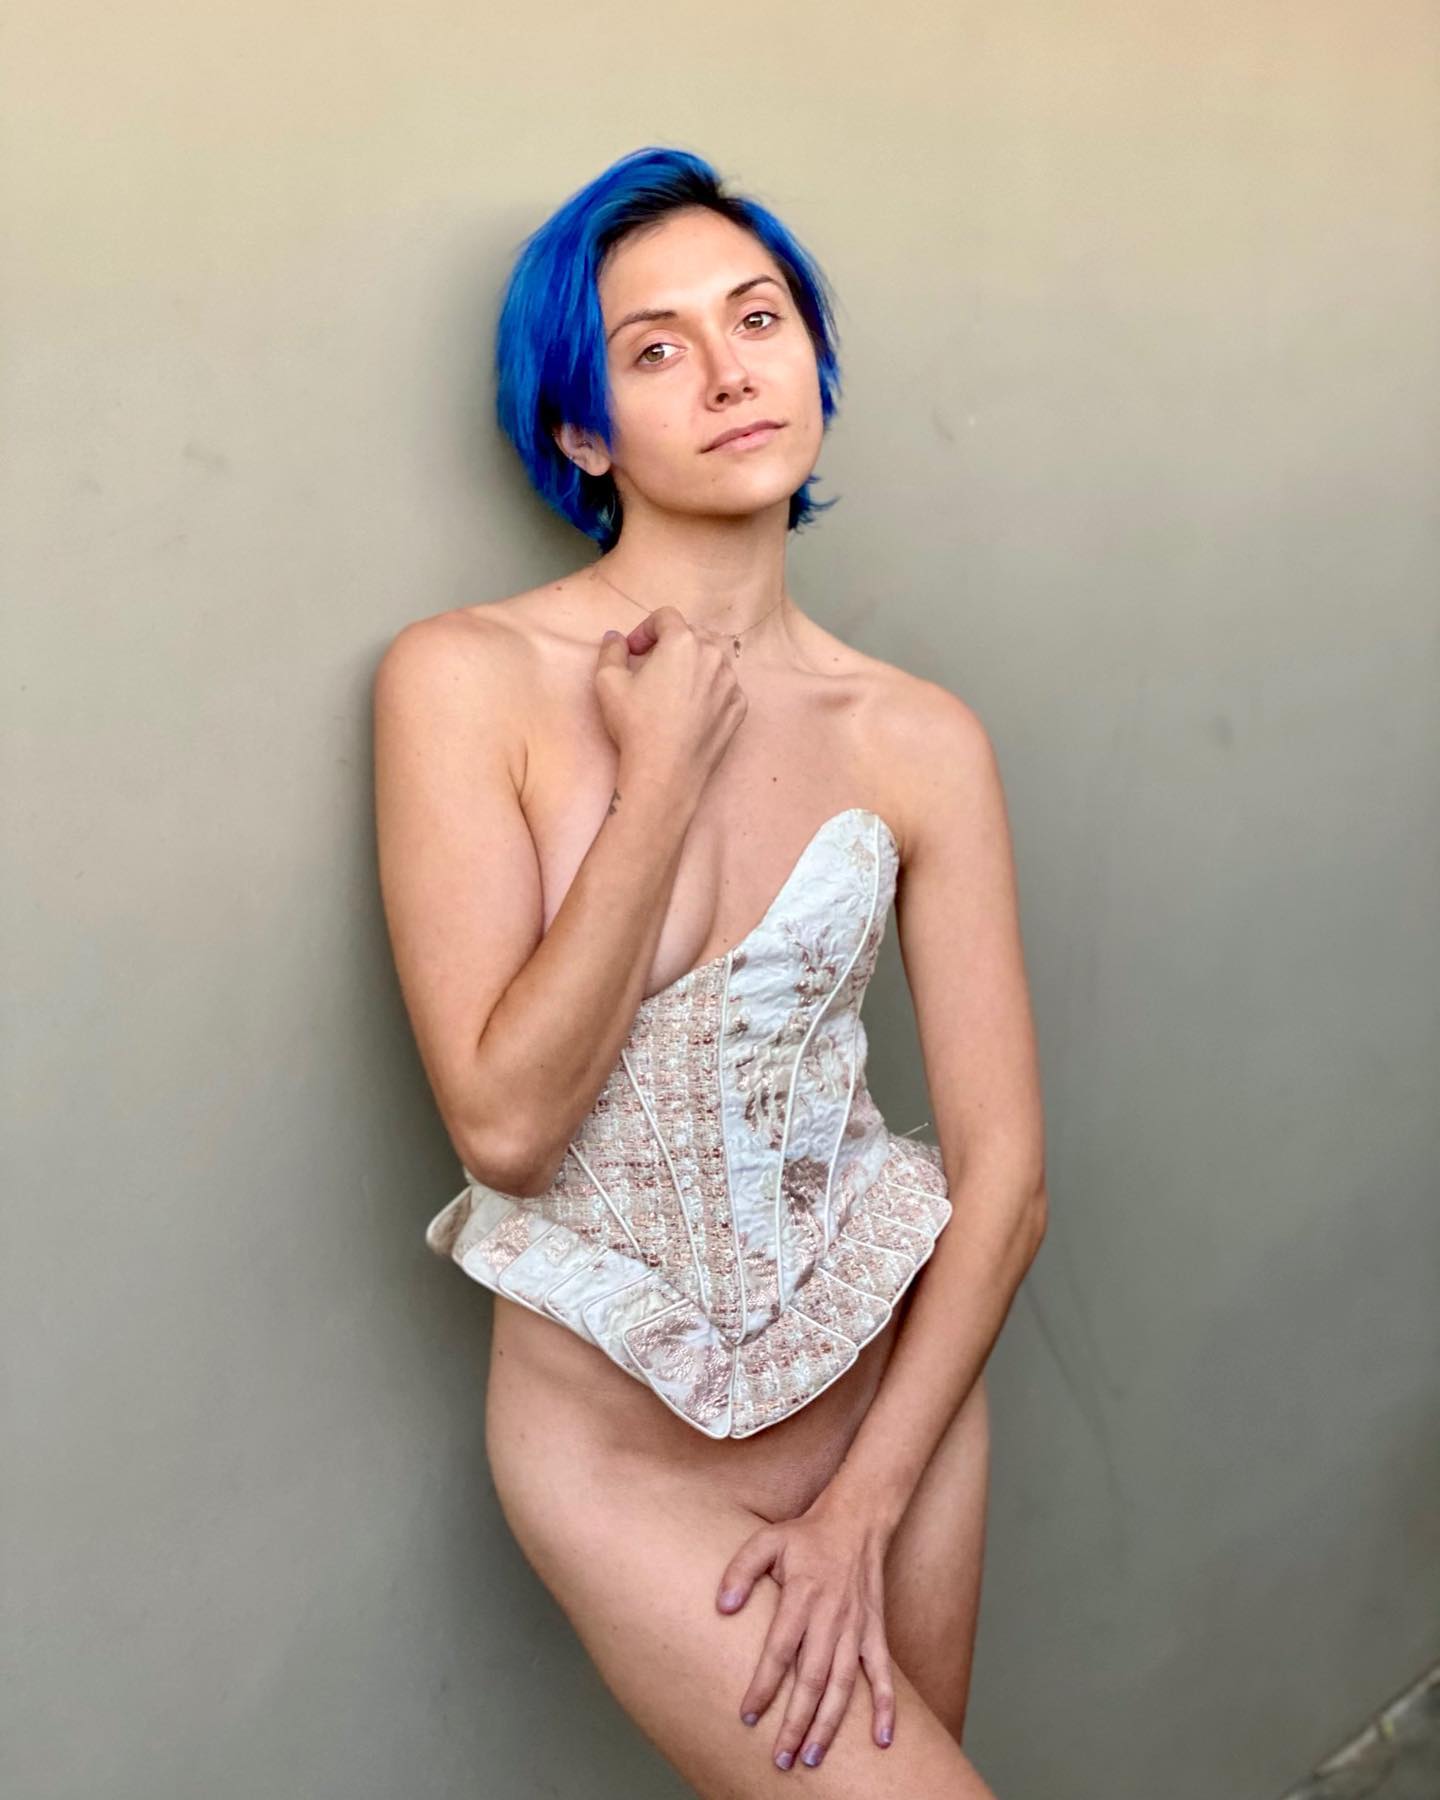 Alyson stoner nude